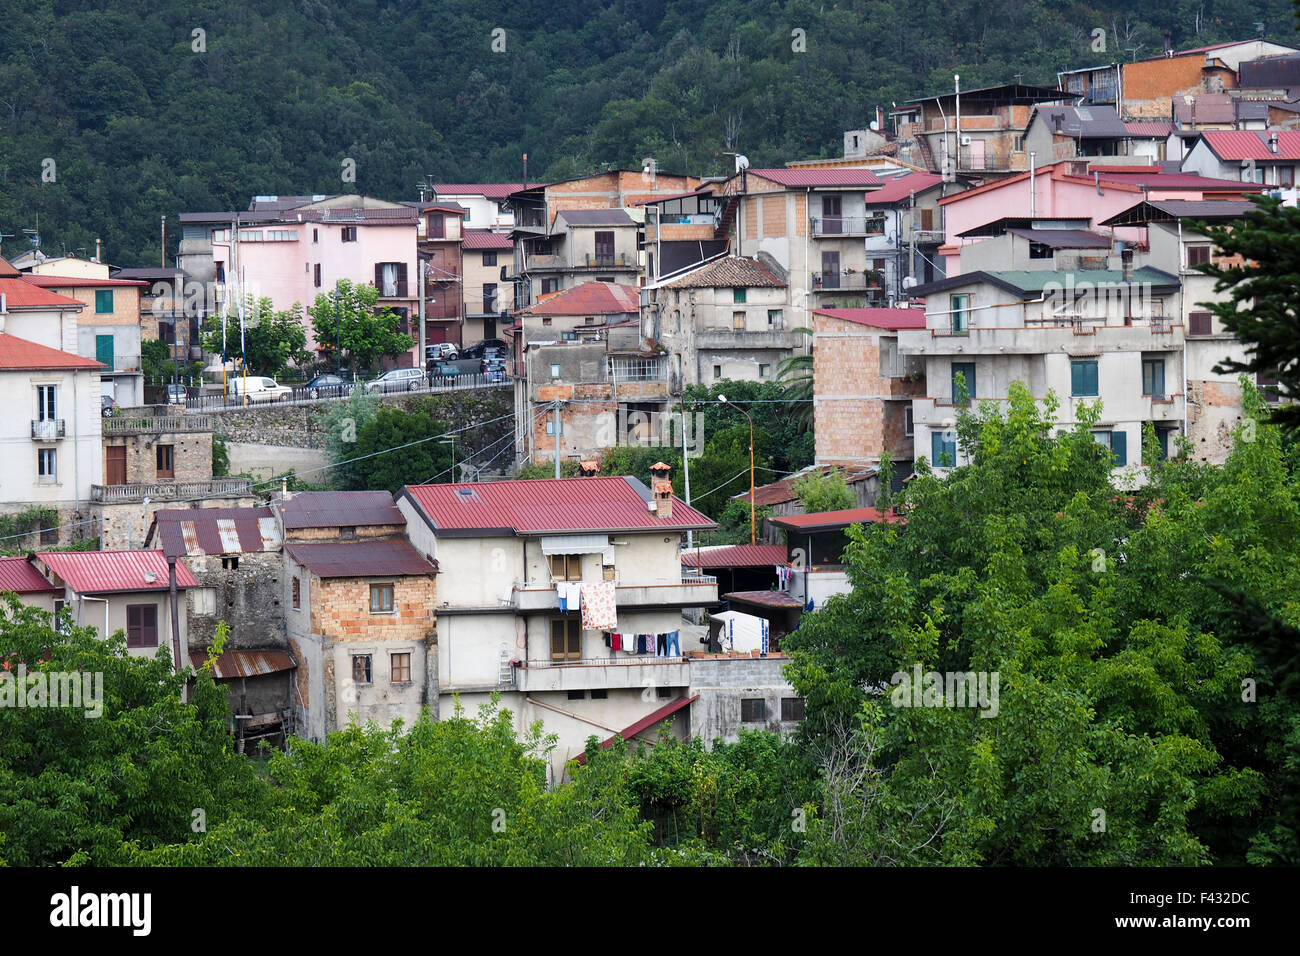 Panaroma of Delianuova, an Italian village in Calabria. Stock Photo